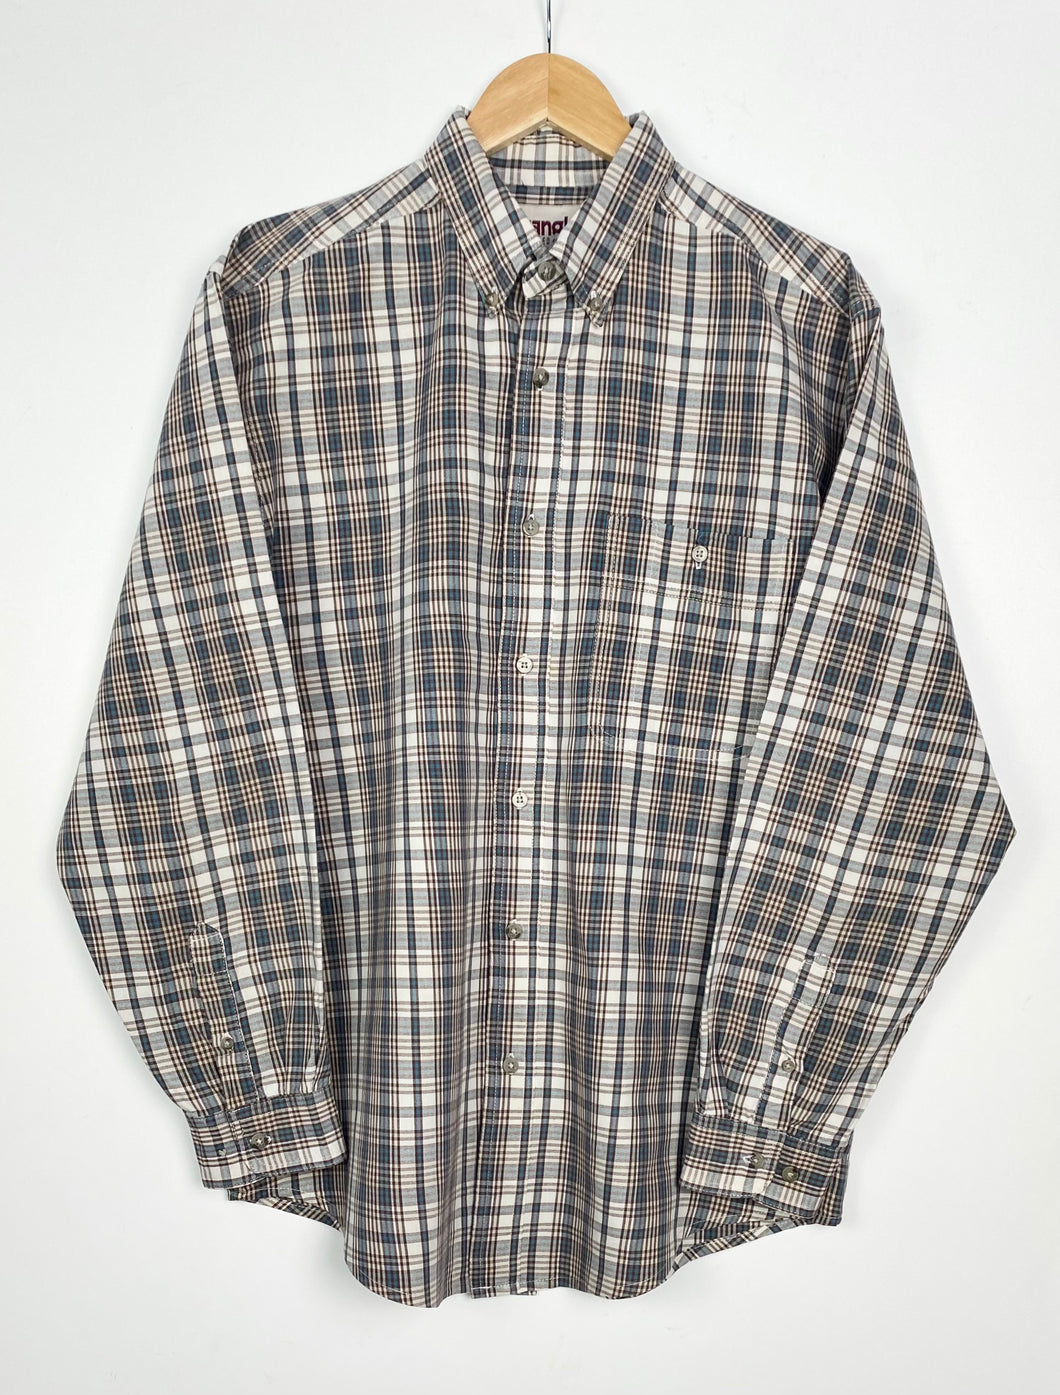 Wrangler check shirt (L)